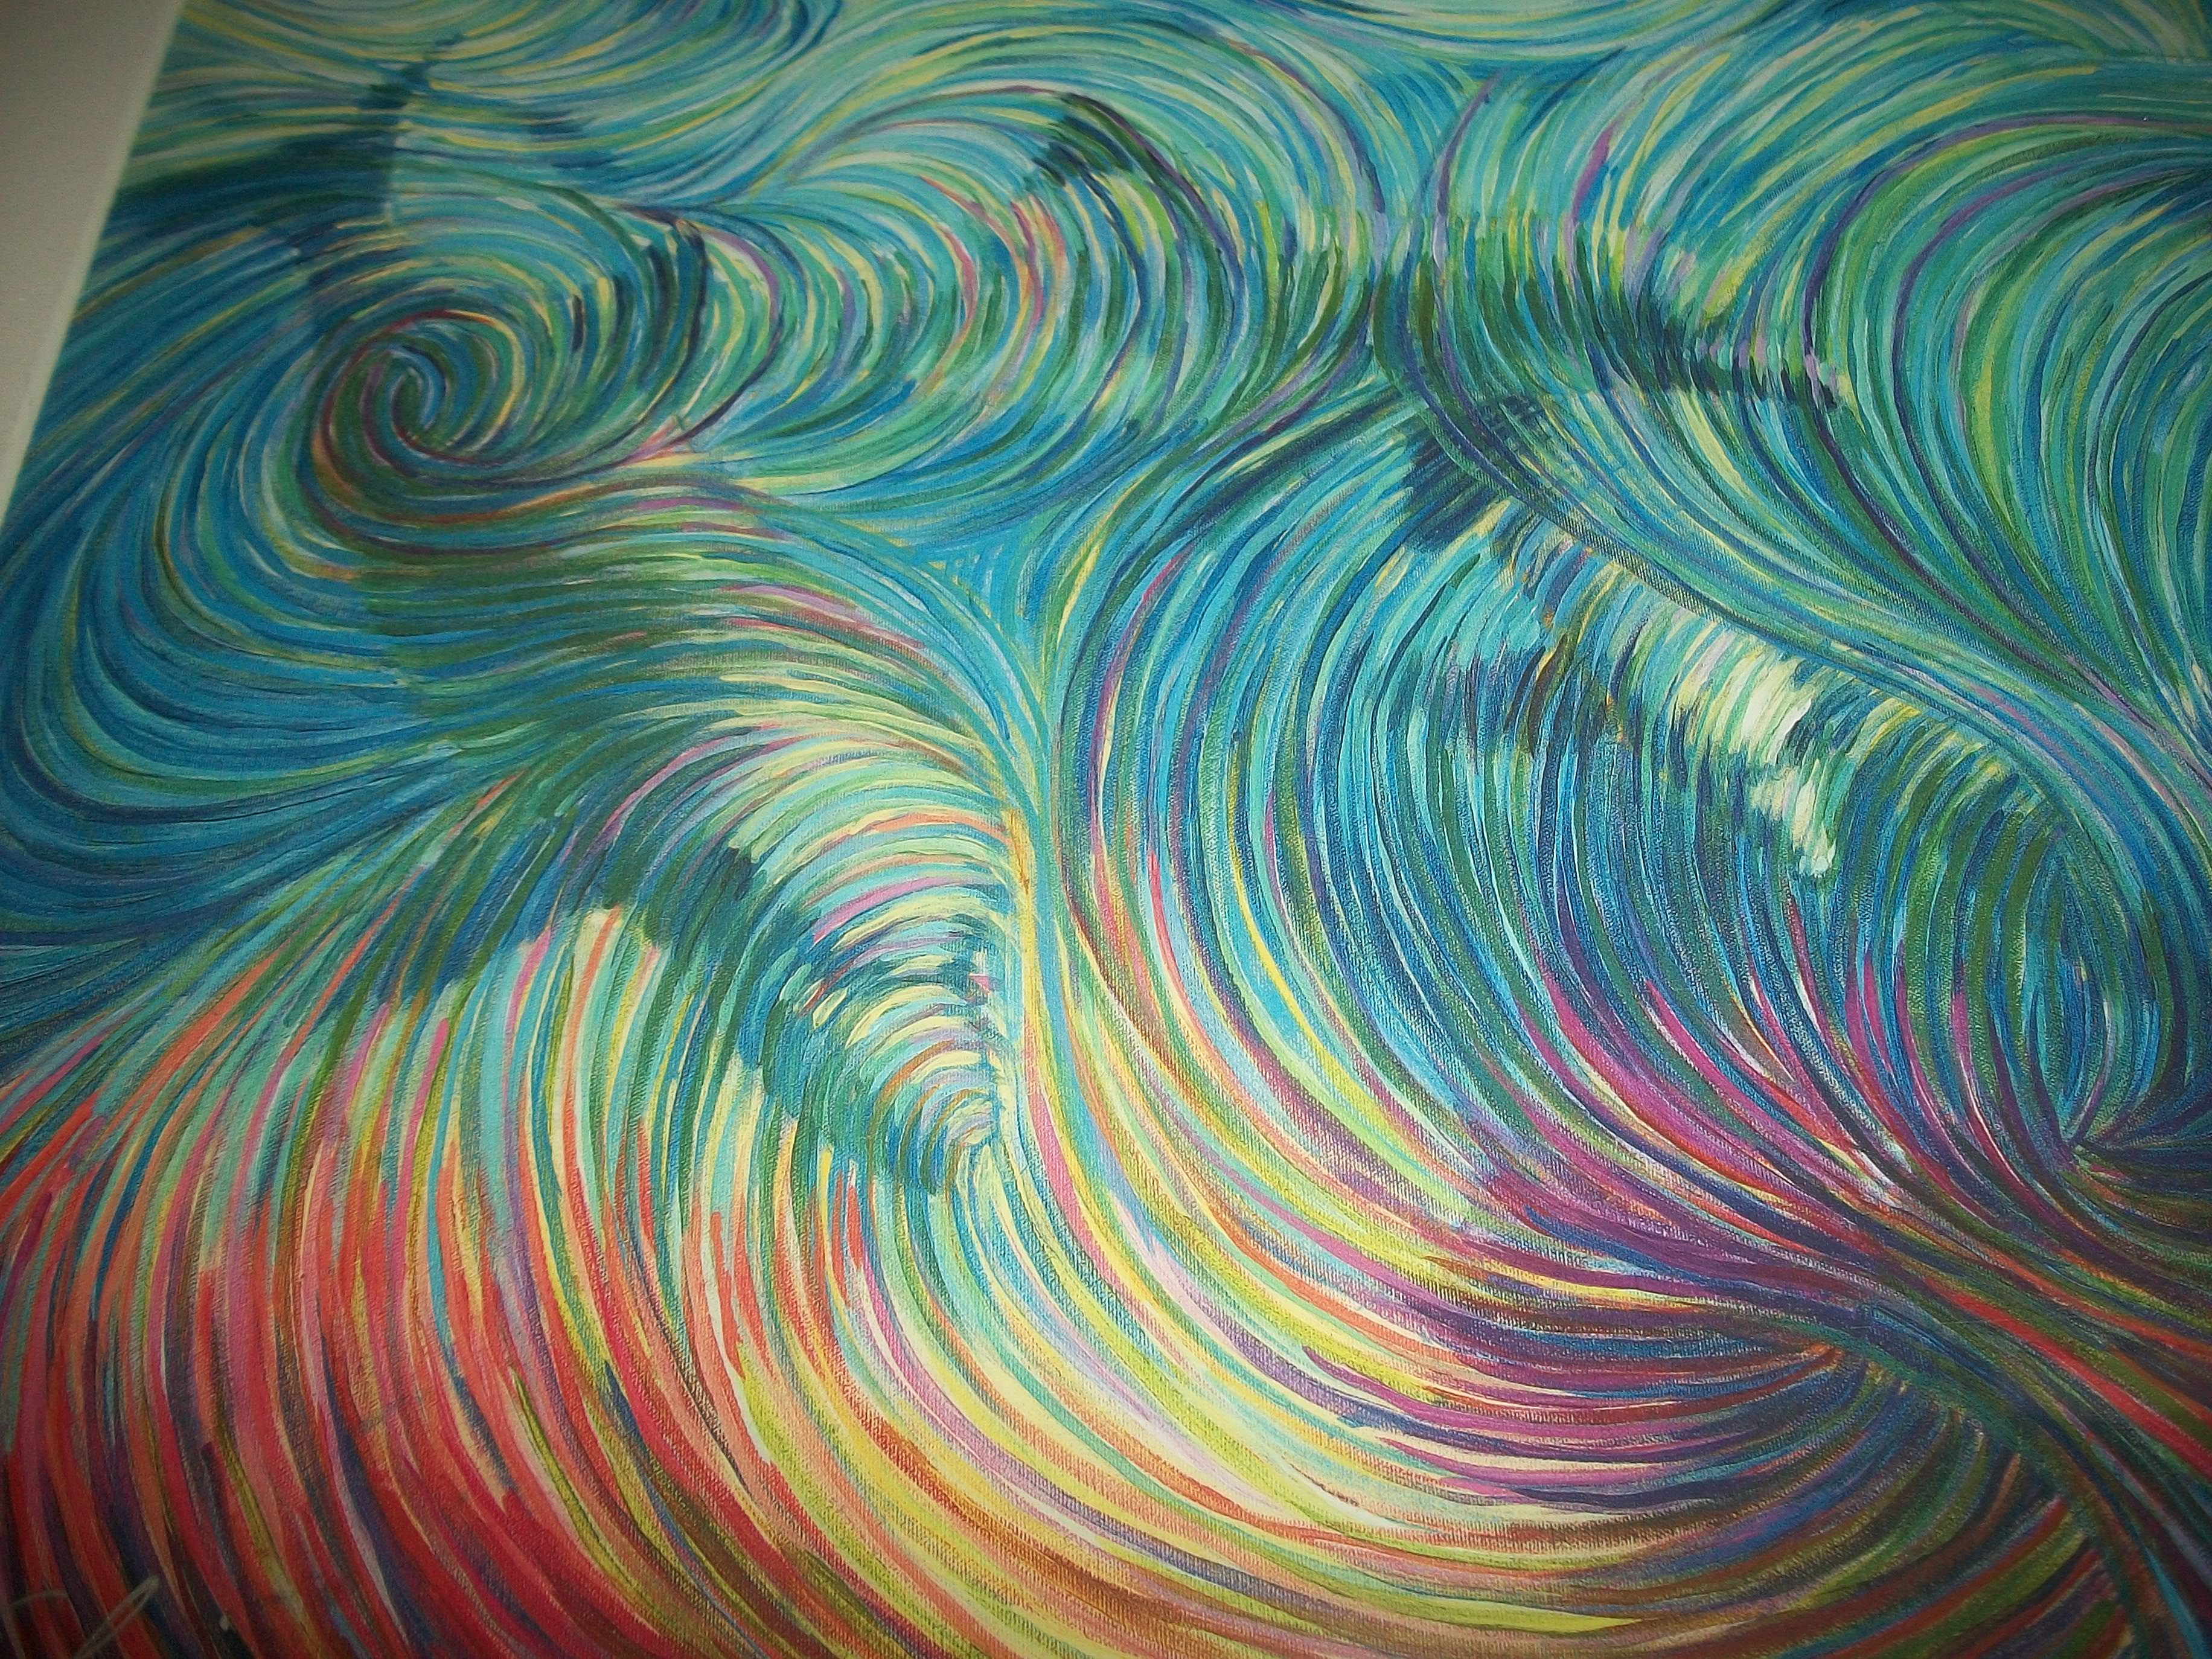 Painting Colorful Swirls 3664x2748